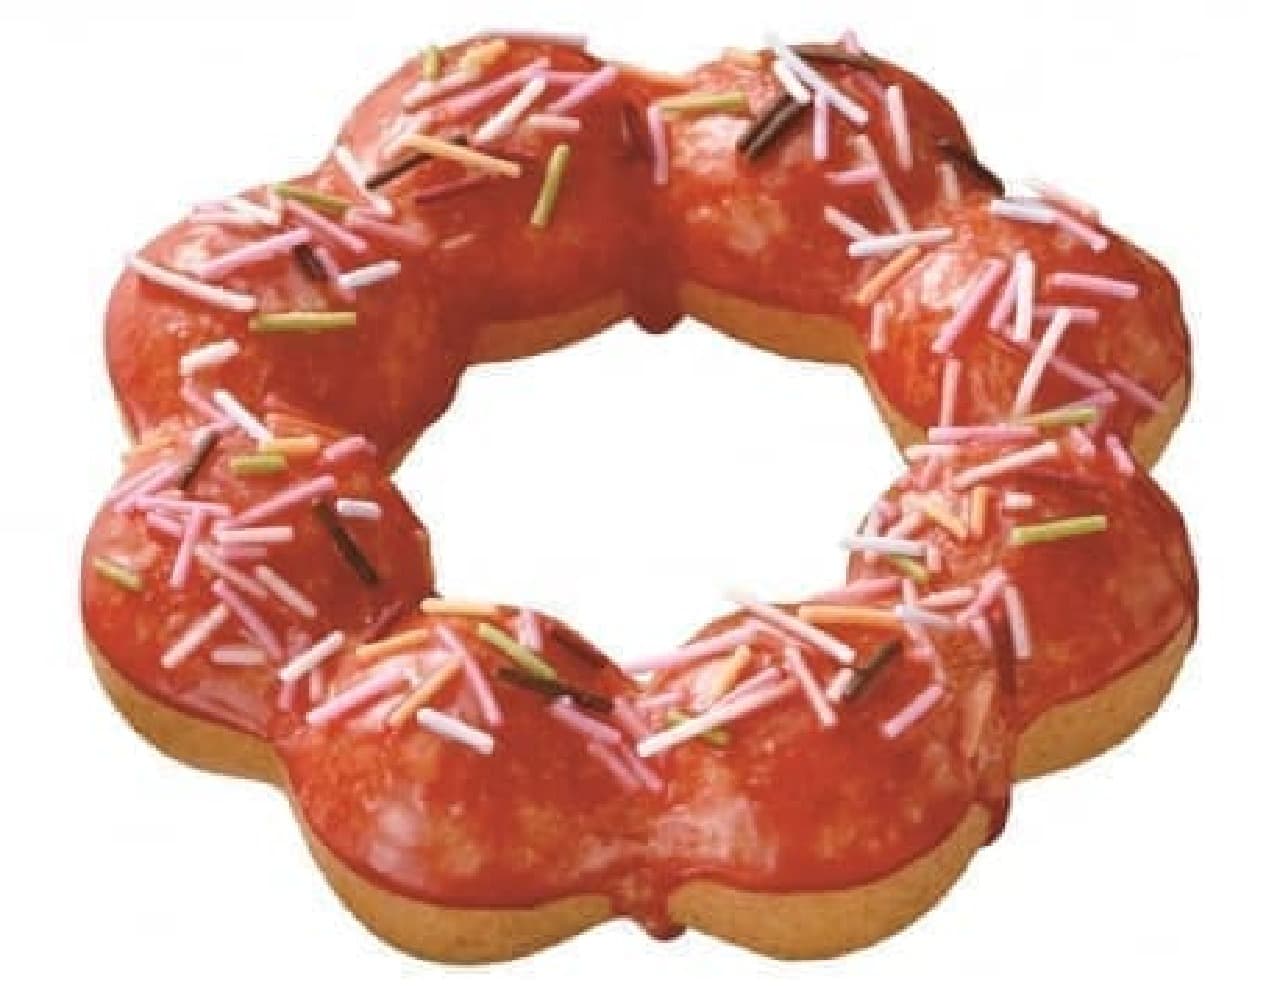 Mister Donut "Pon de Reese"